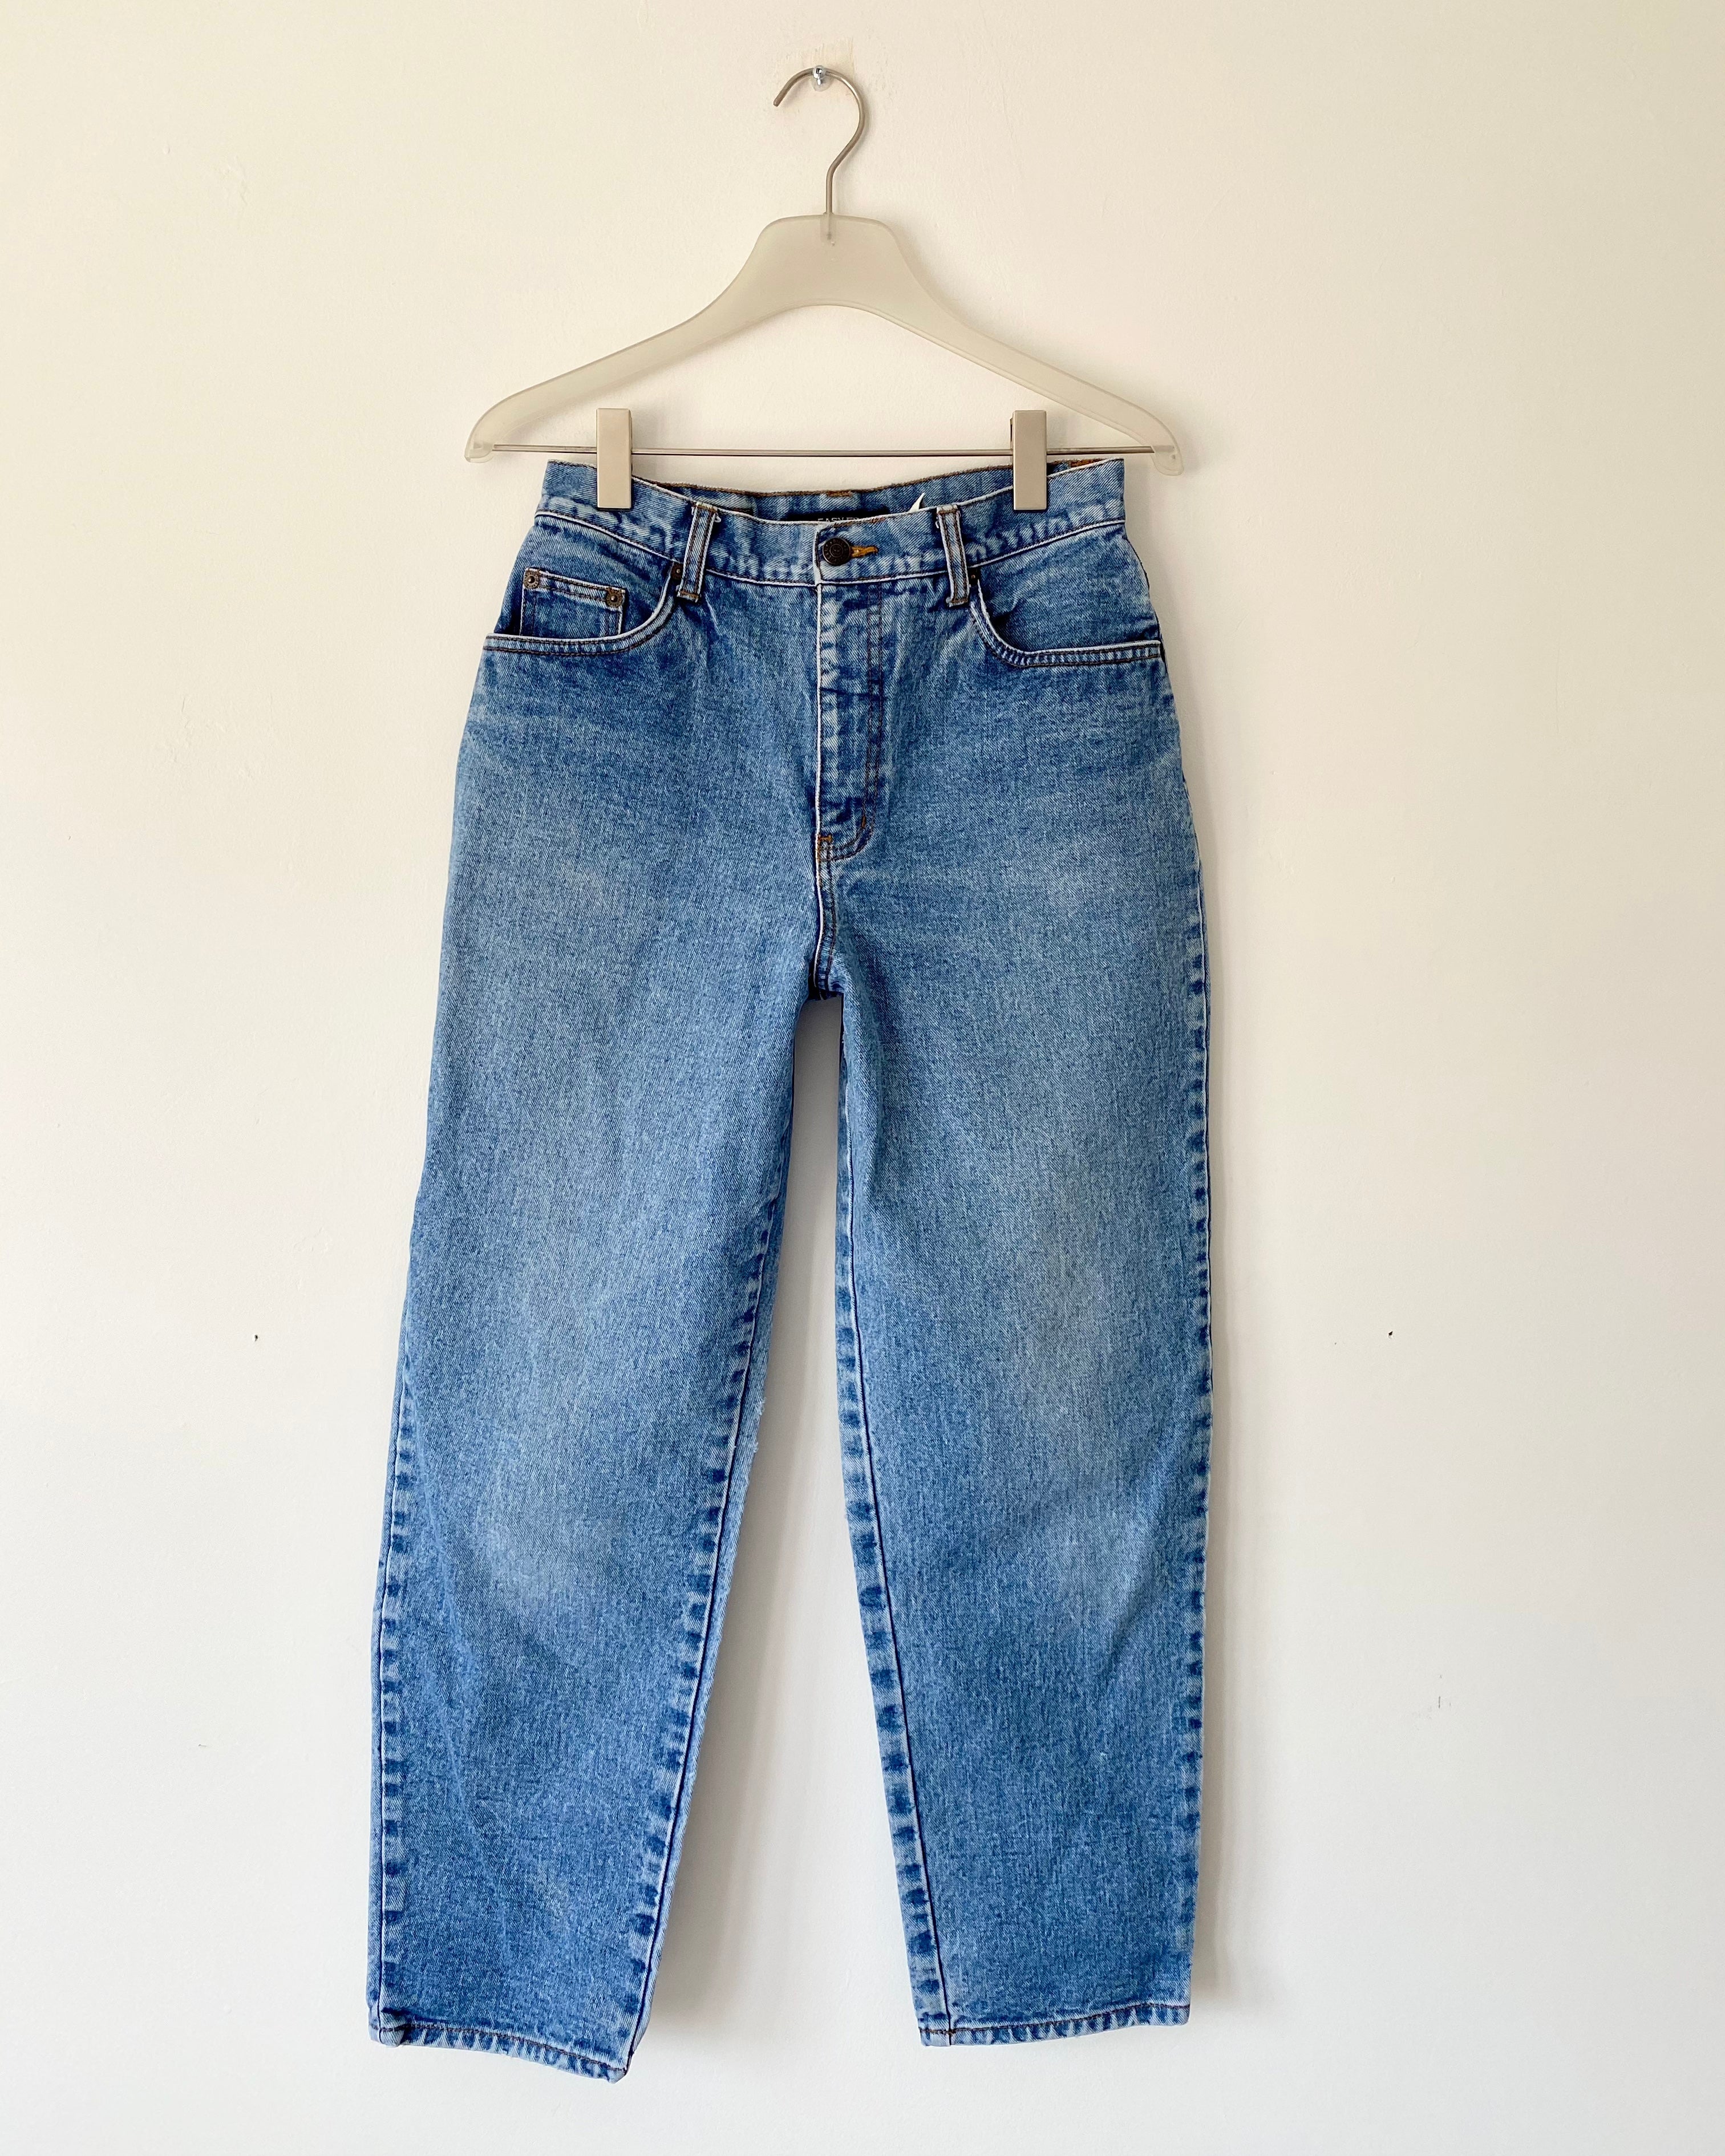 Vintage Bill Blass Medium Wash Jeans size 28/29